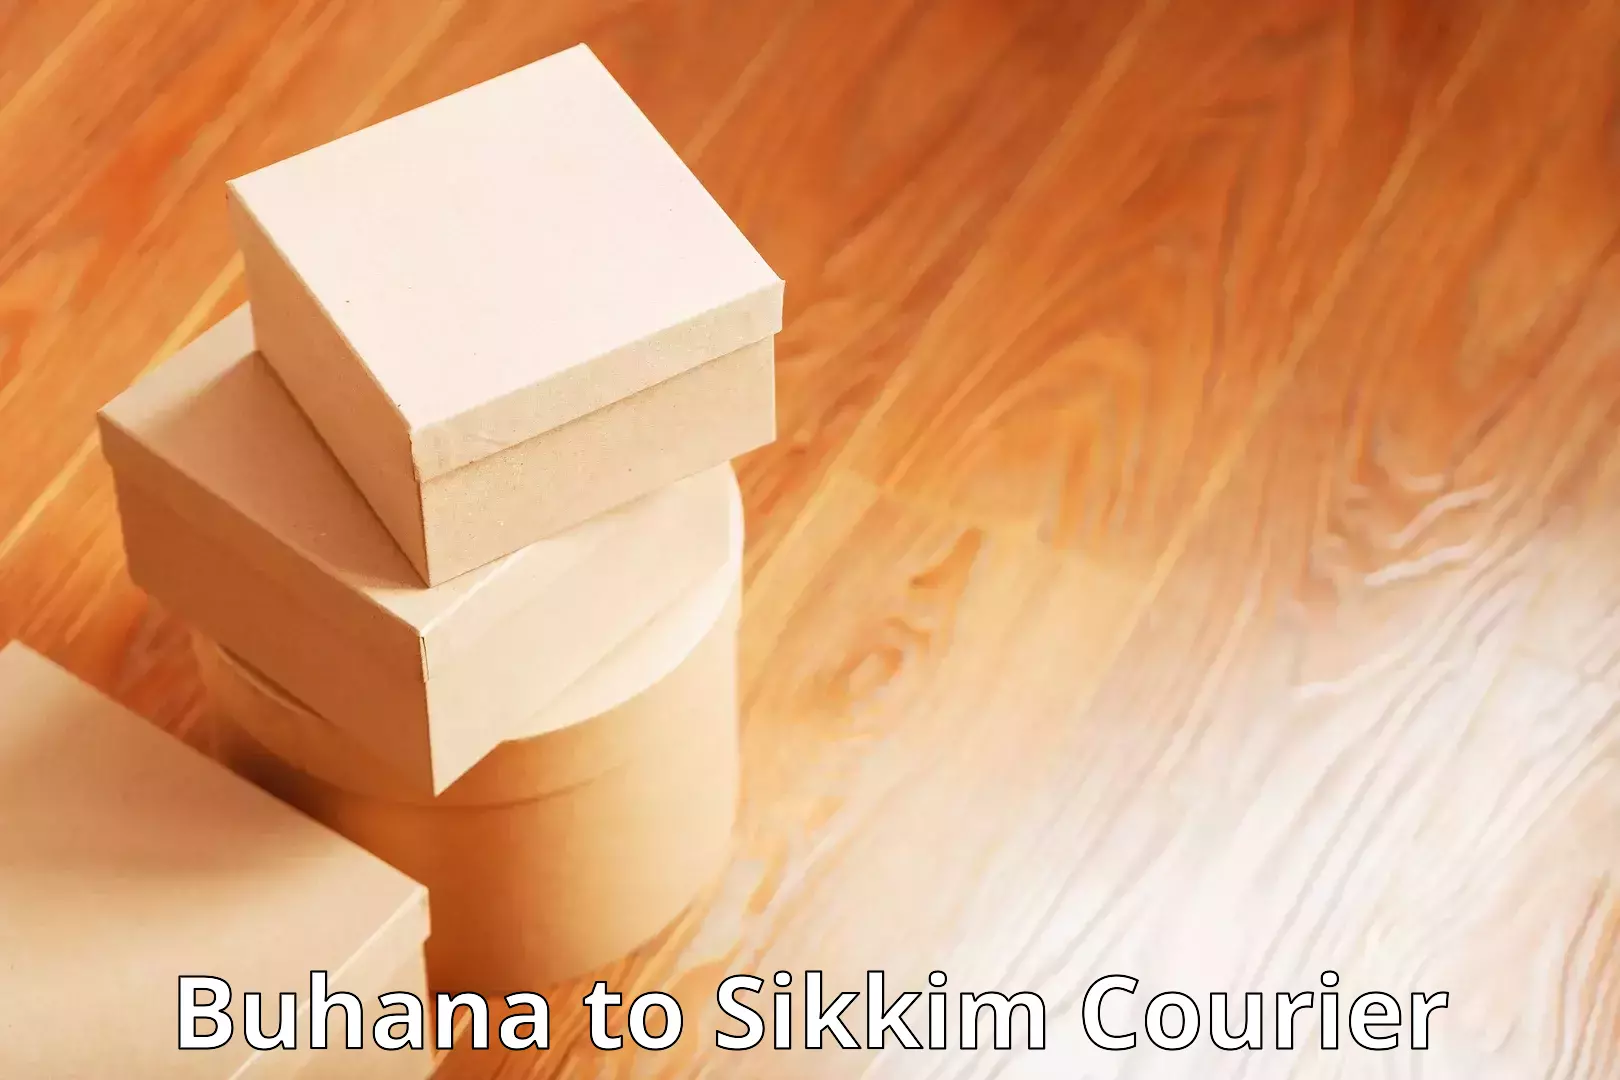 Bulk order courier Buhana to Pelling